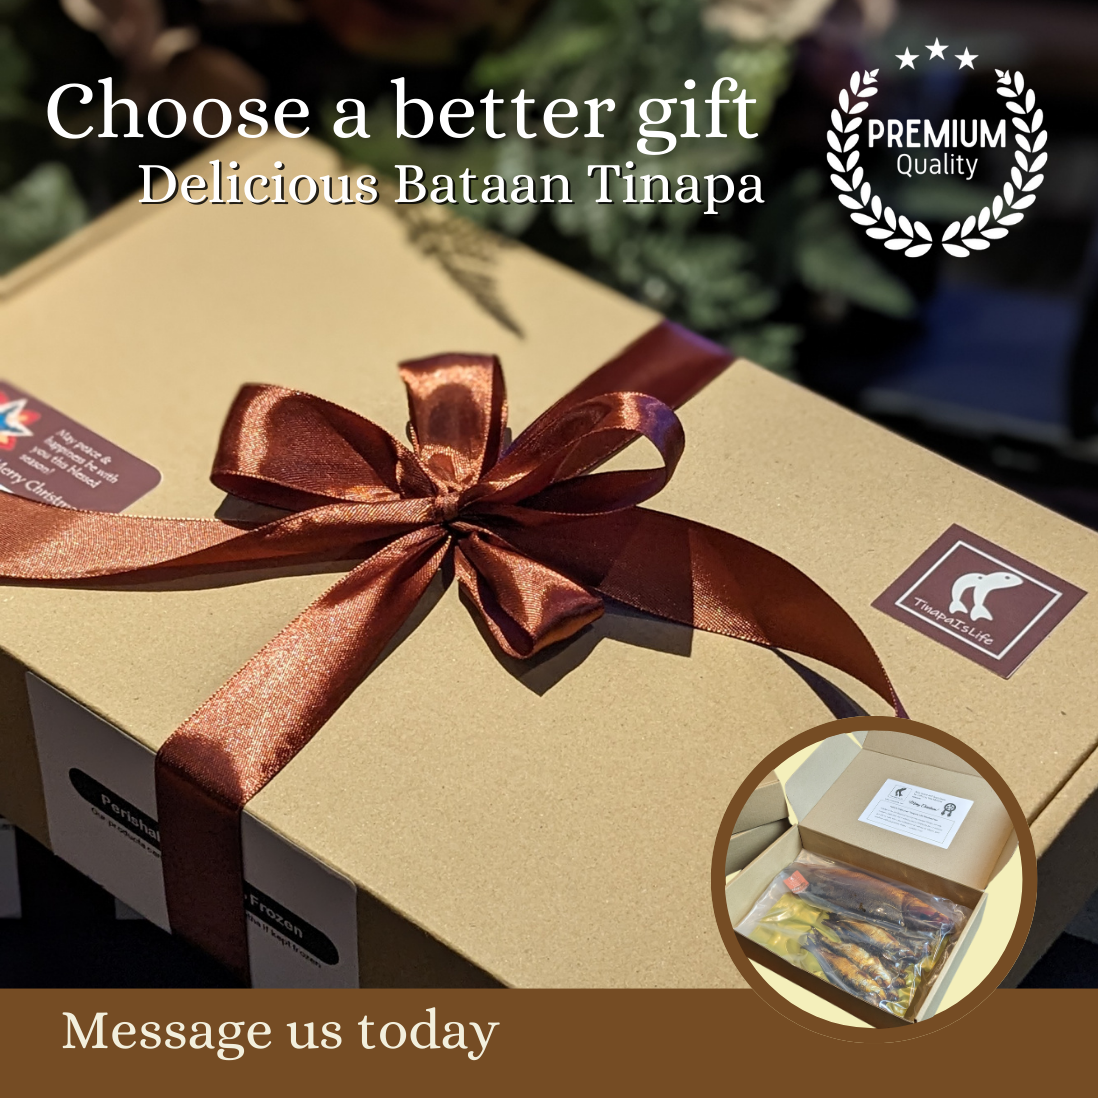 A Taste of Bataan Best Seller Collection Gift Set